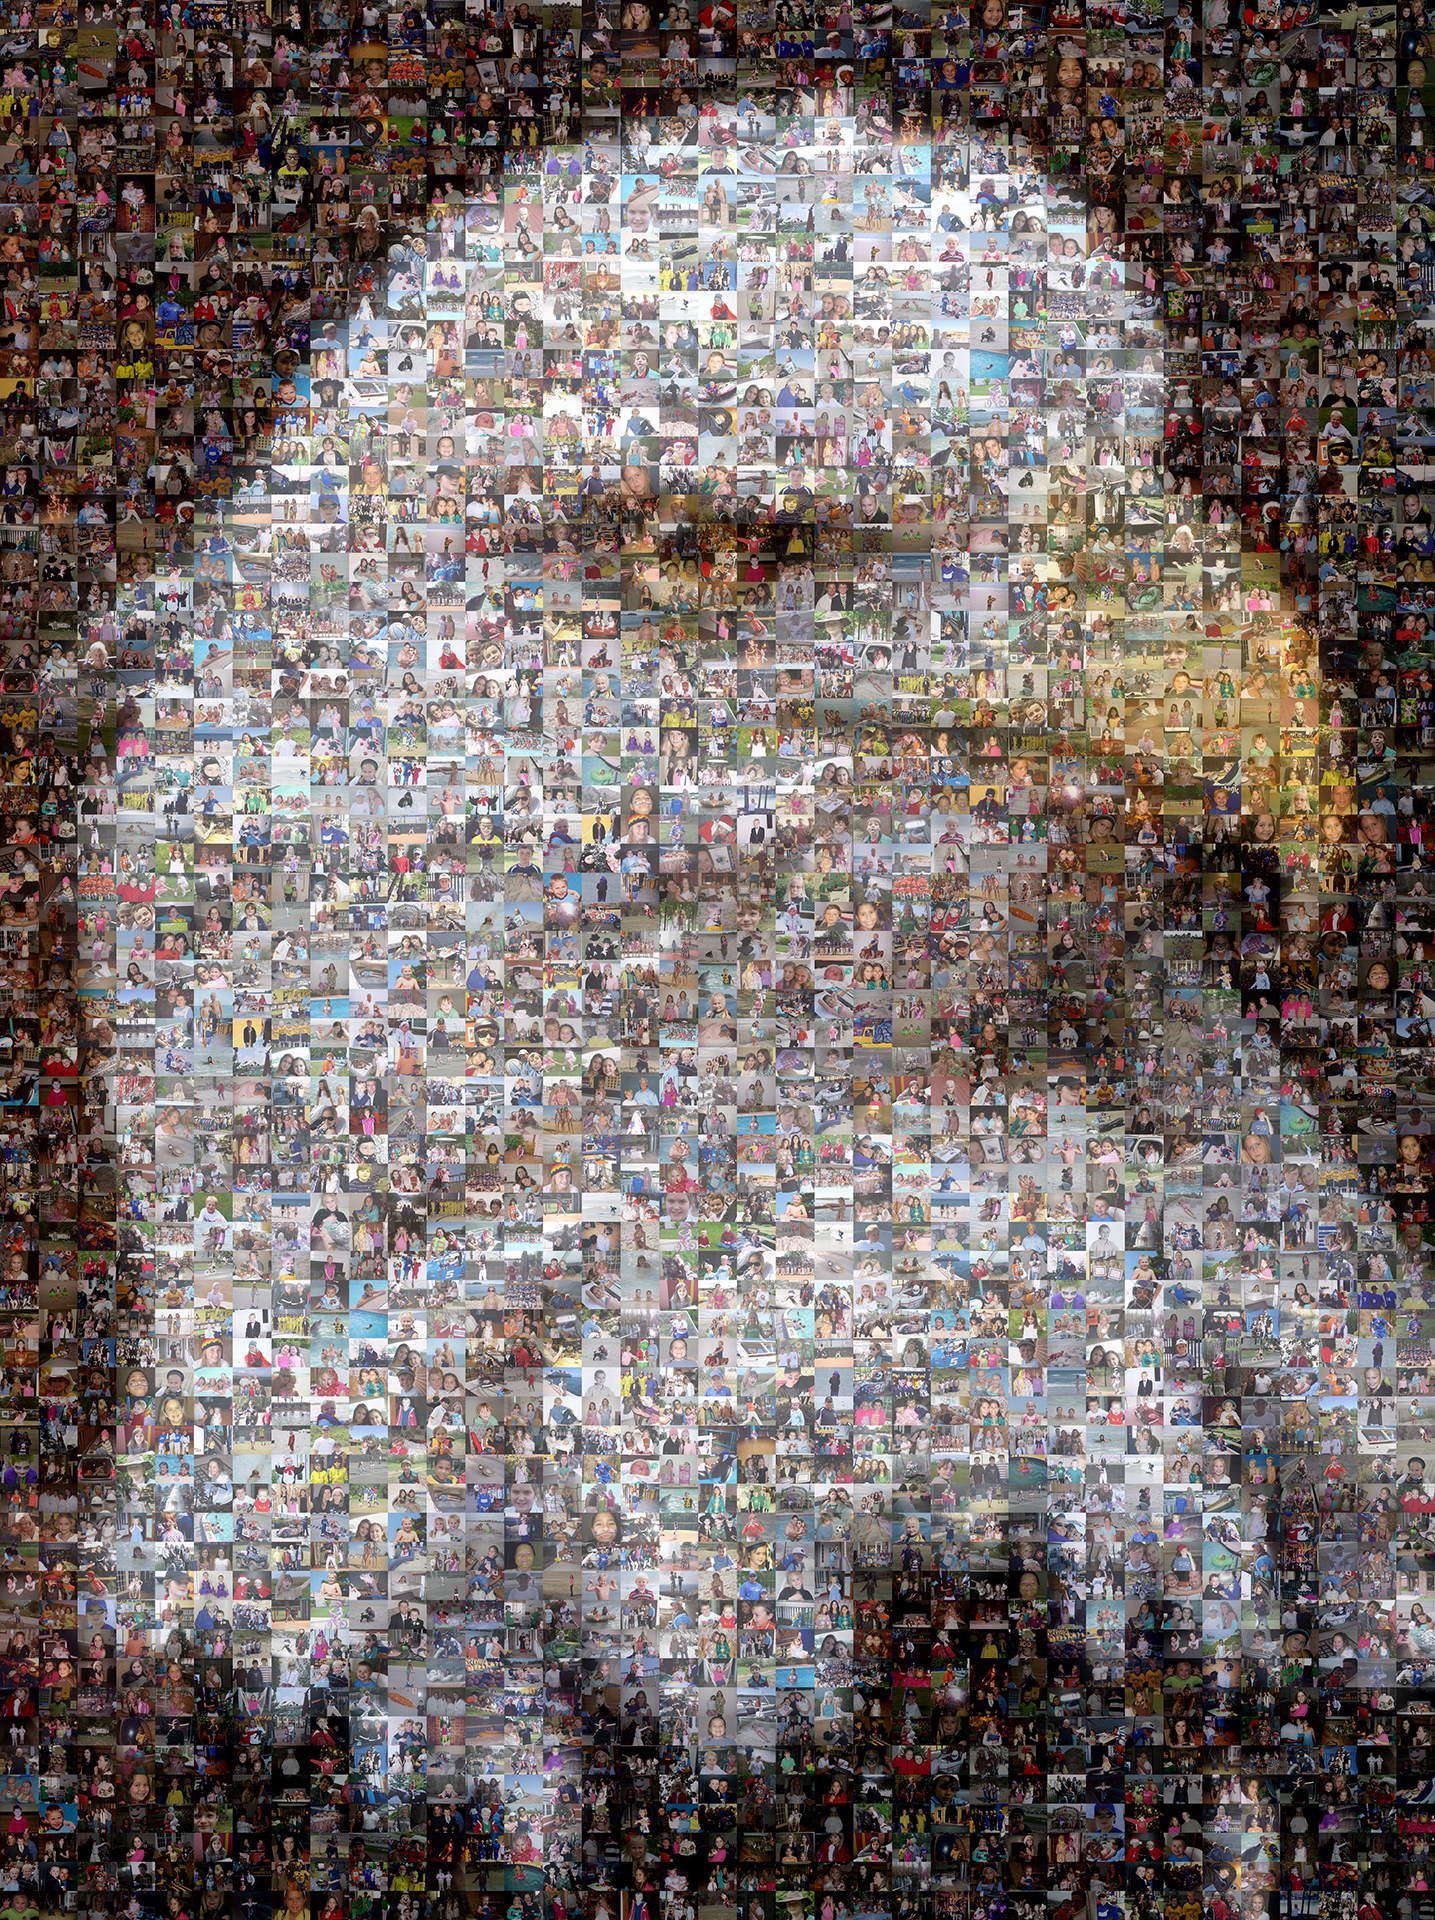 photo mosaic created using 877 family photos